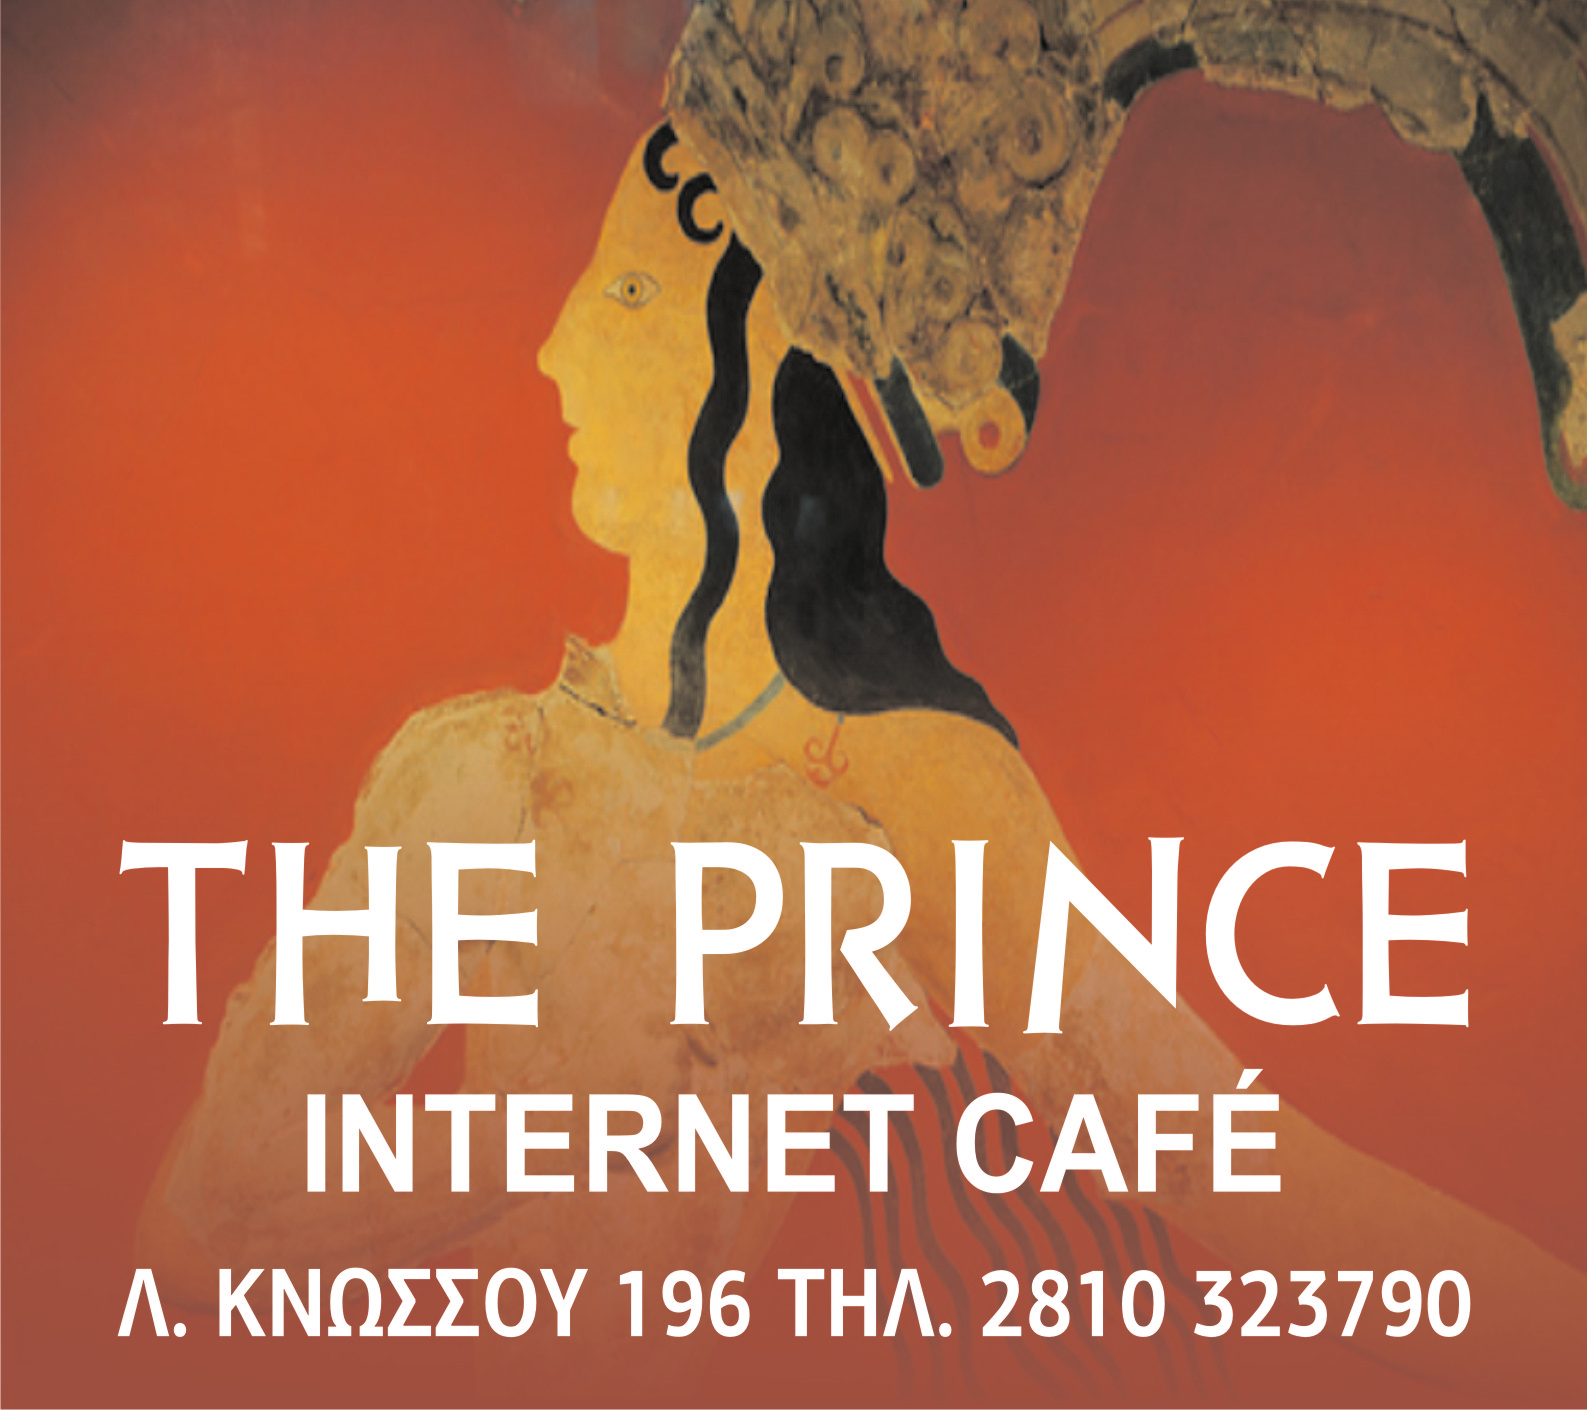 THE PRINCE INTERNET CAFE